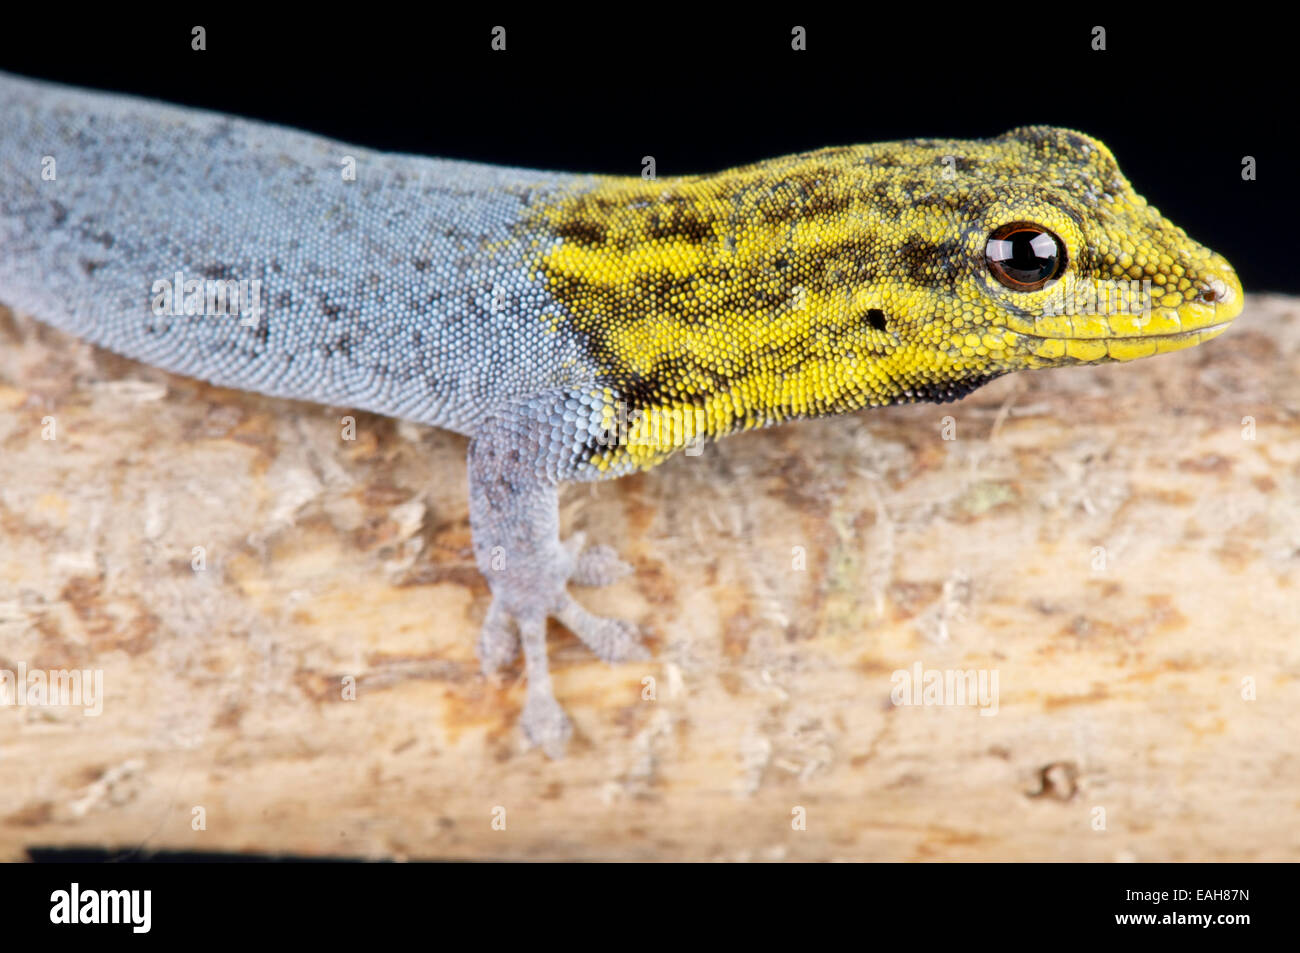 Yellow-headed dwarf gecko / Lygodactylus luteopicturatus Stock Photo